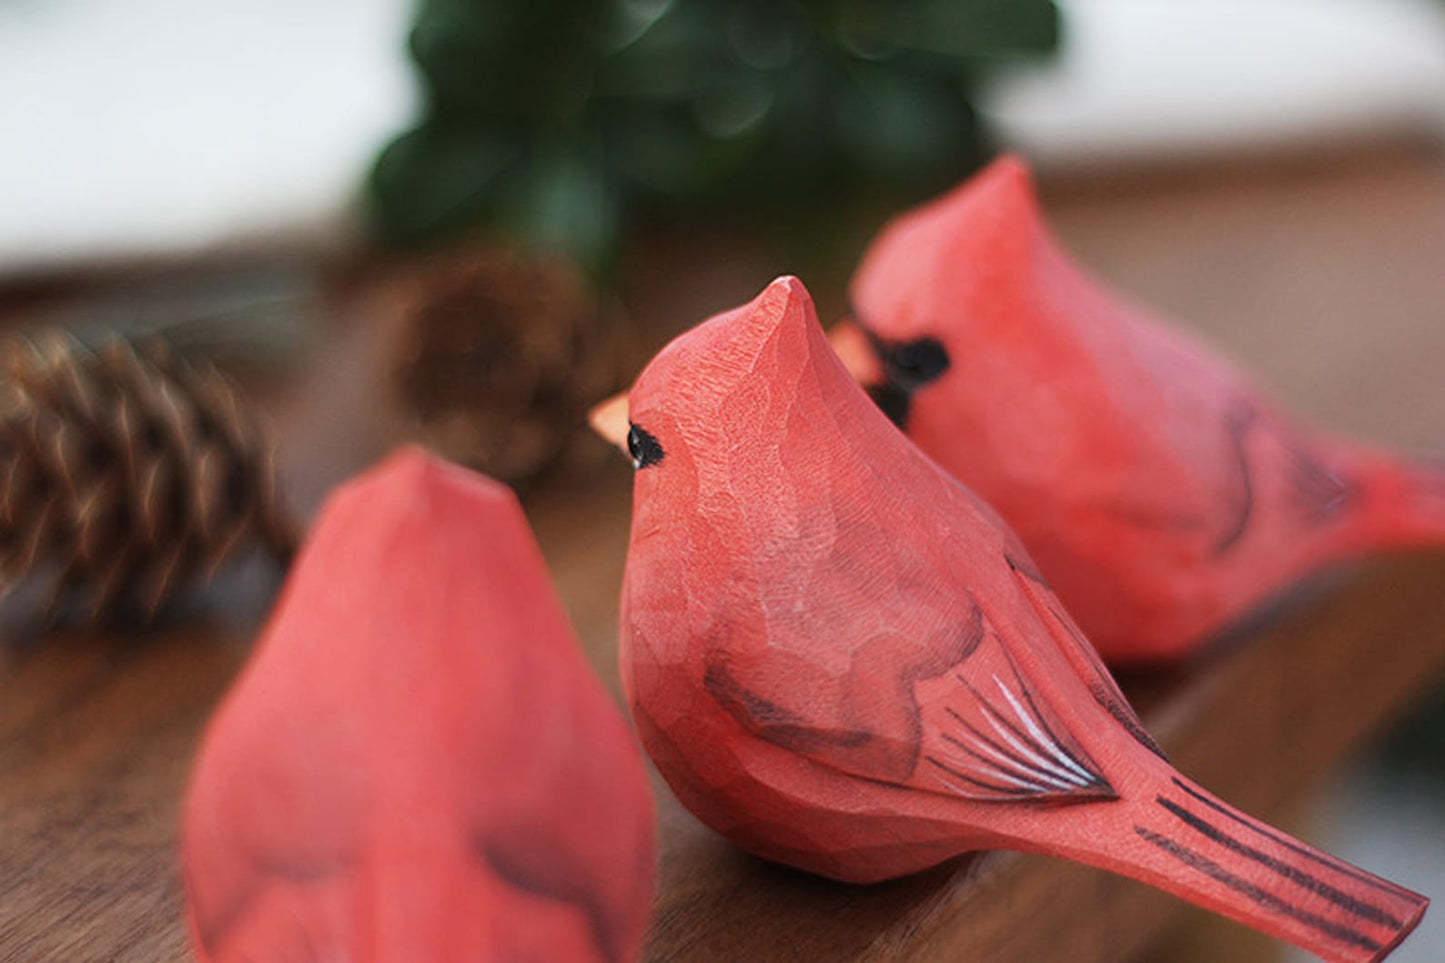 Cardinal Ornaments